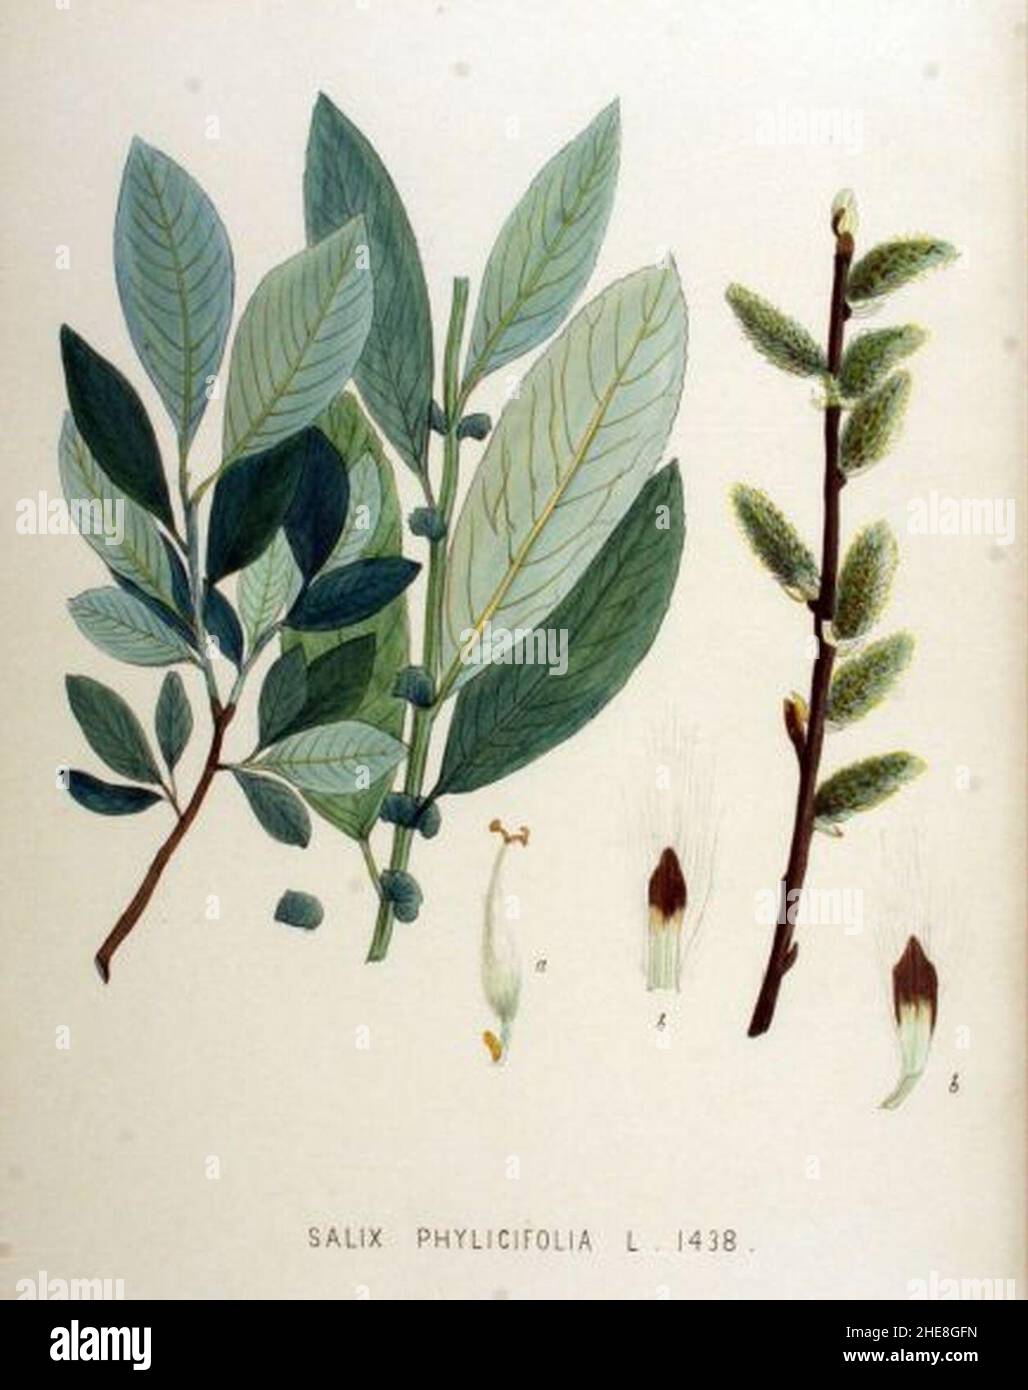 Salix phylicifolia. Stock Photo